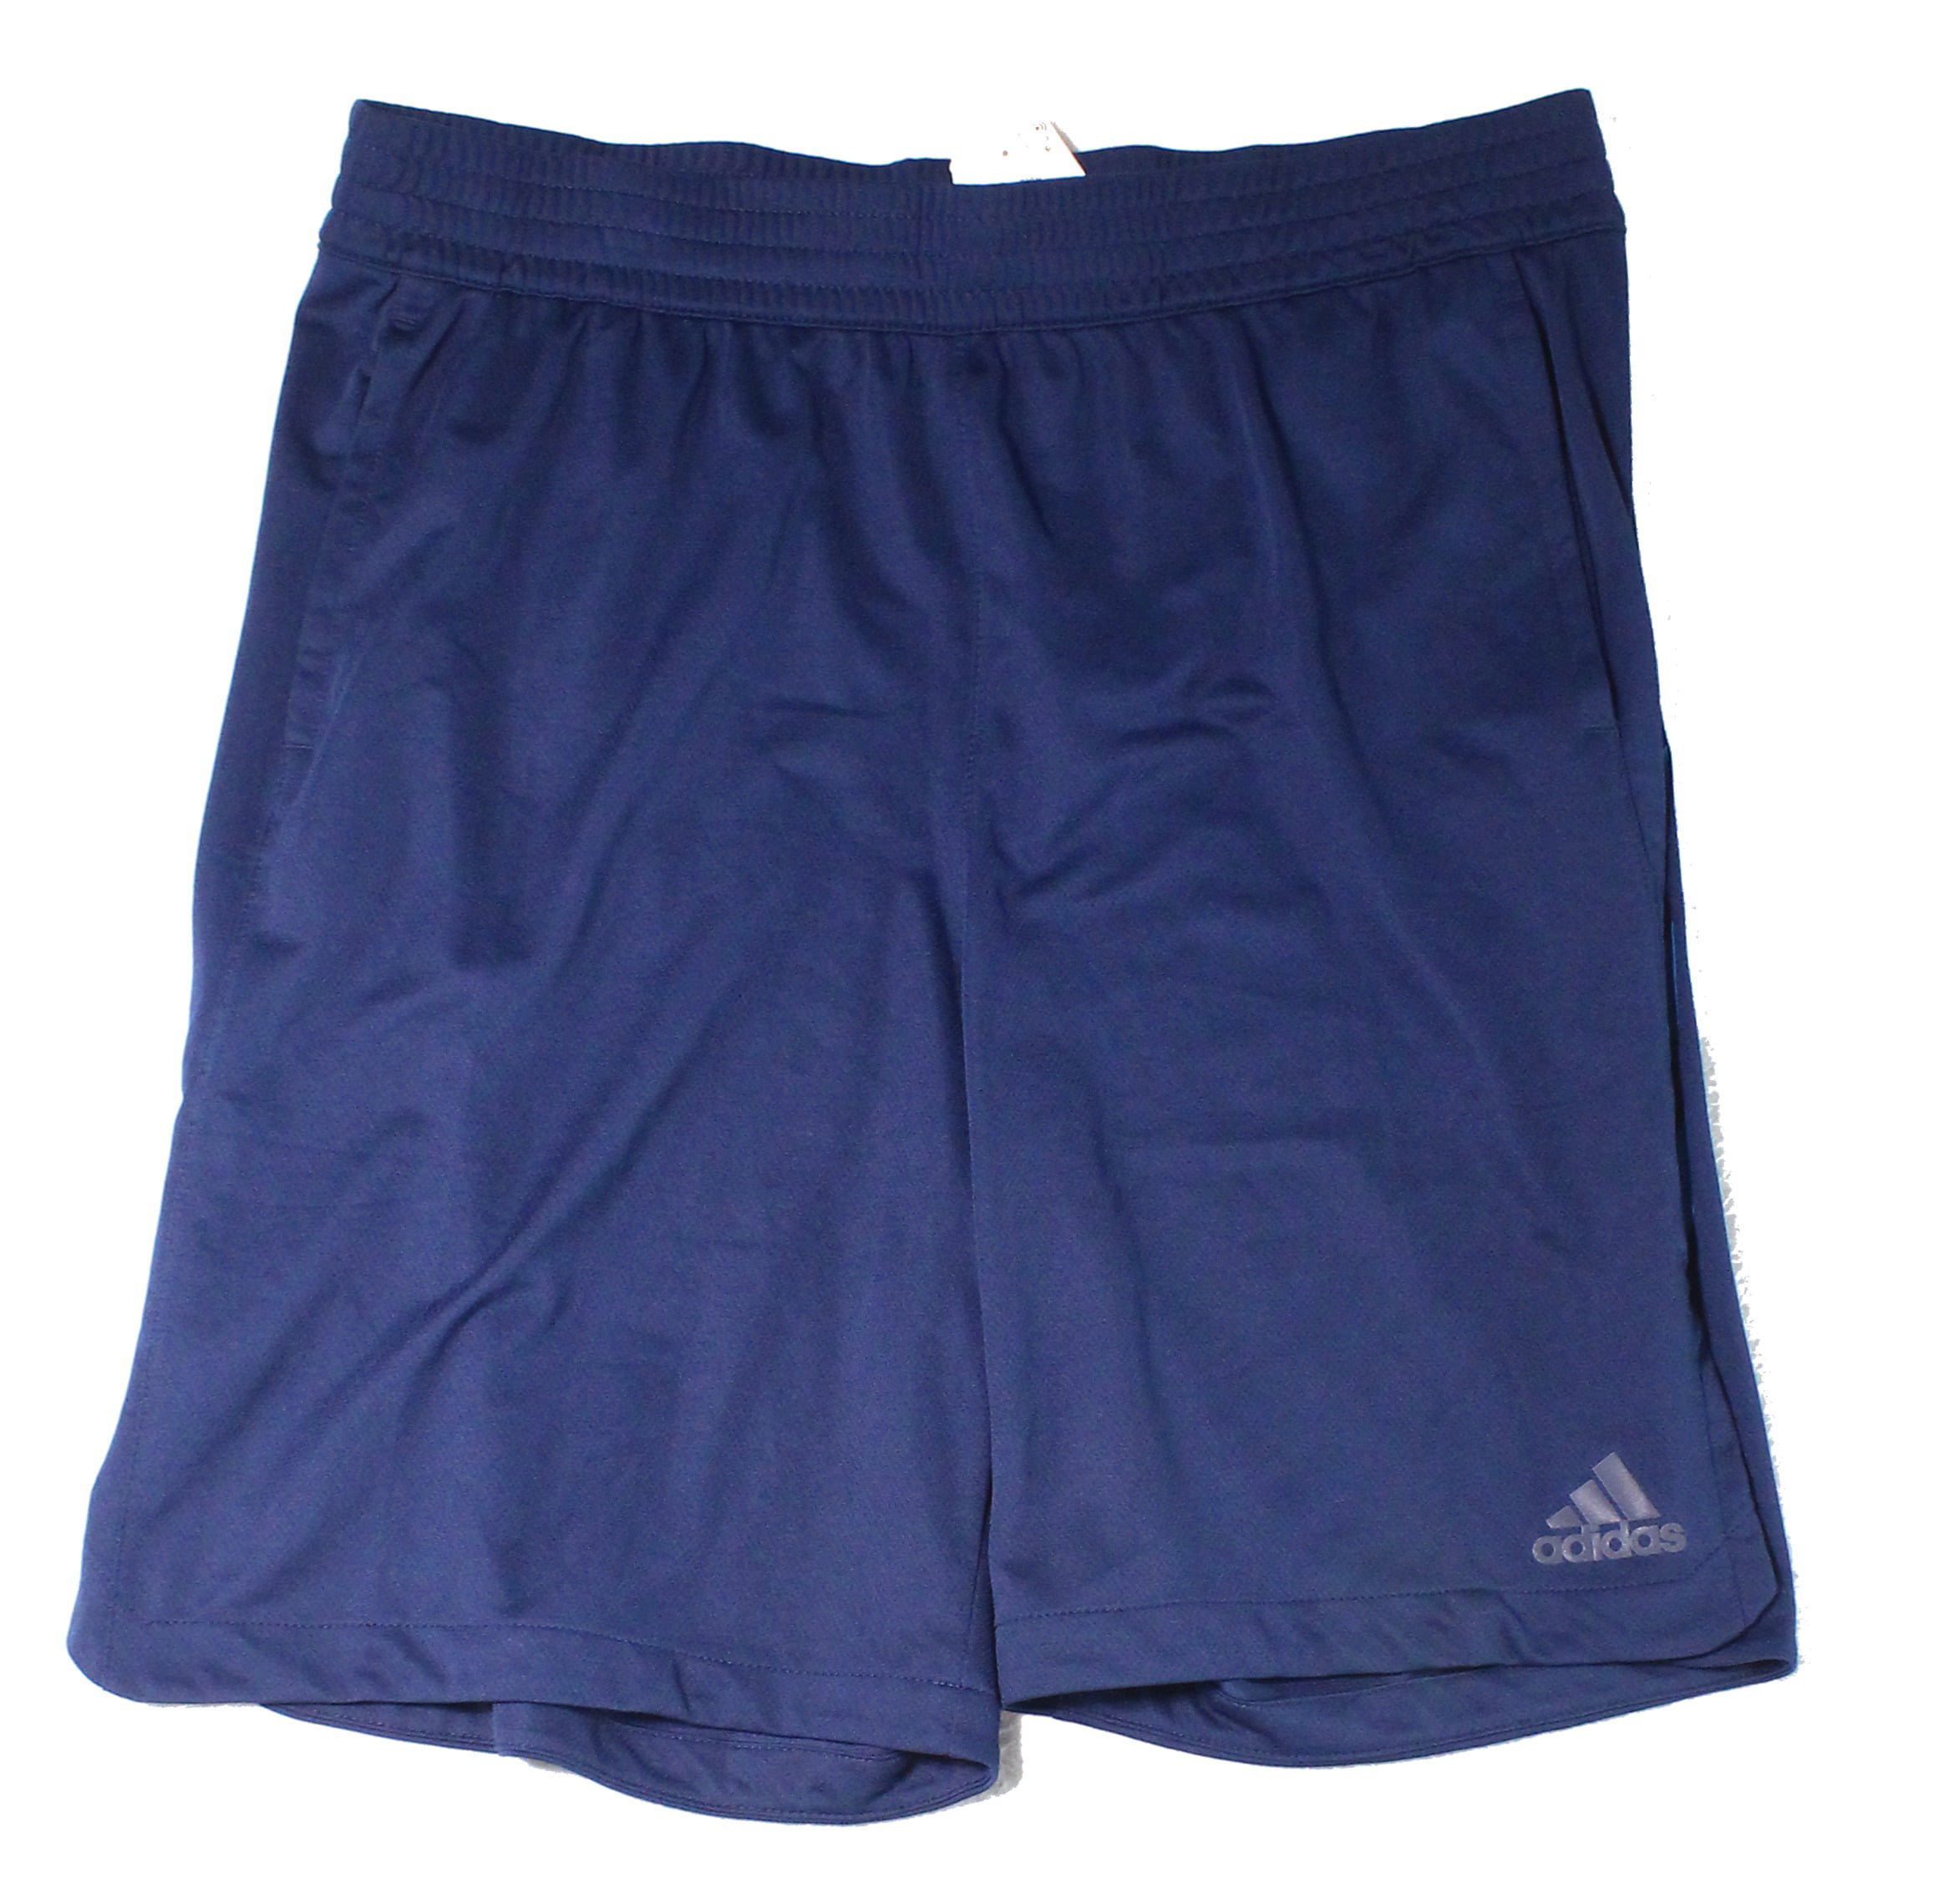 Adidas Shorts - Mens Shorts Navy Mesh Stretch Drawstring Pull-On 2XL ...